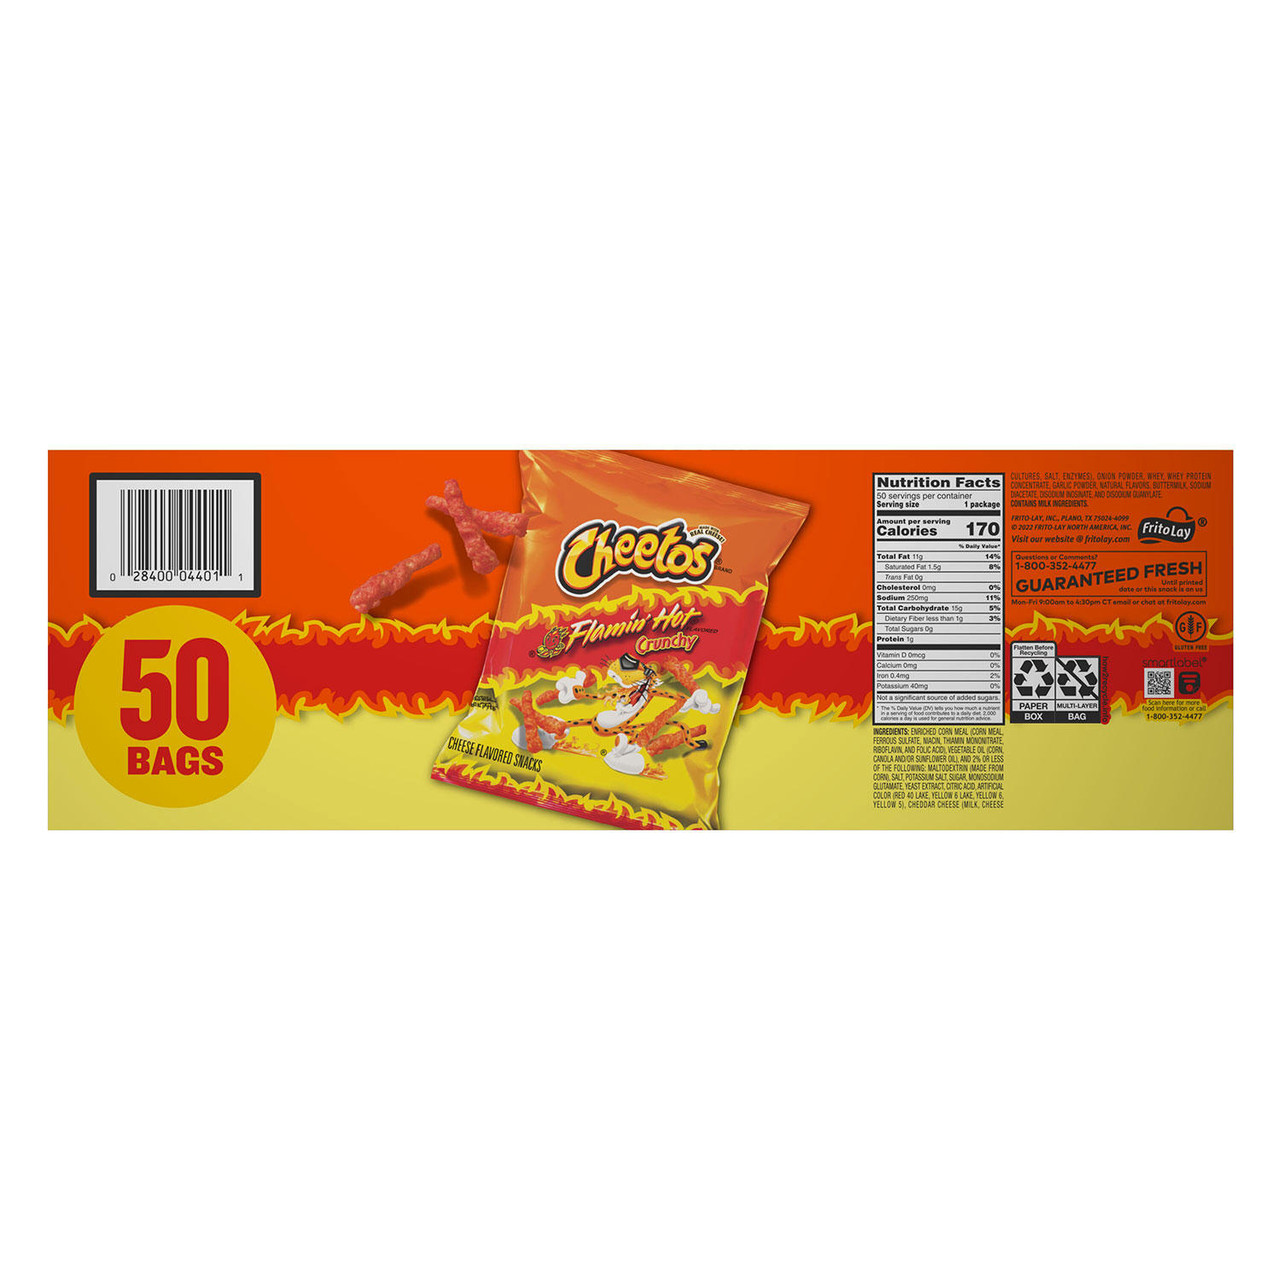 Cheetos Flamin' Hot Crunchy (1 oz., 50 pk.) - [From 103.00 - Choose pk Qty ] - *Ships from Miami